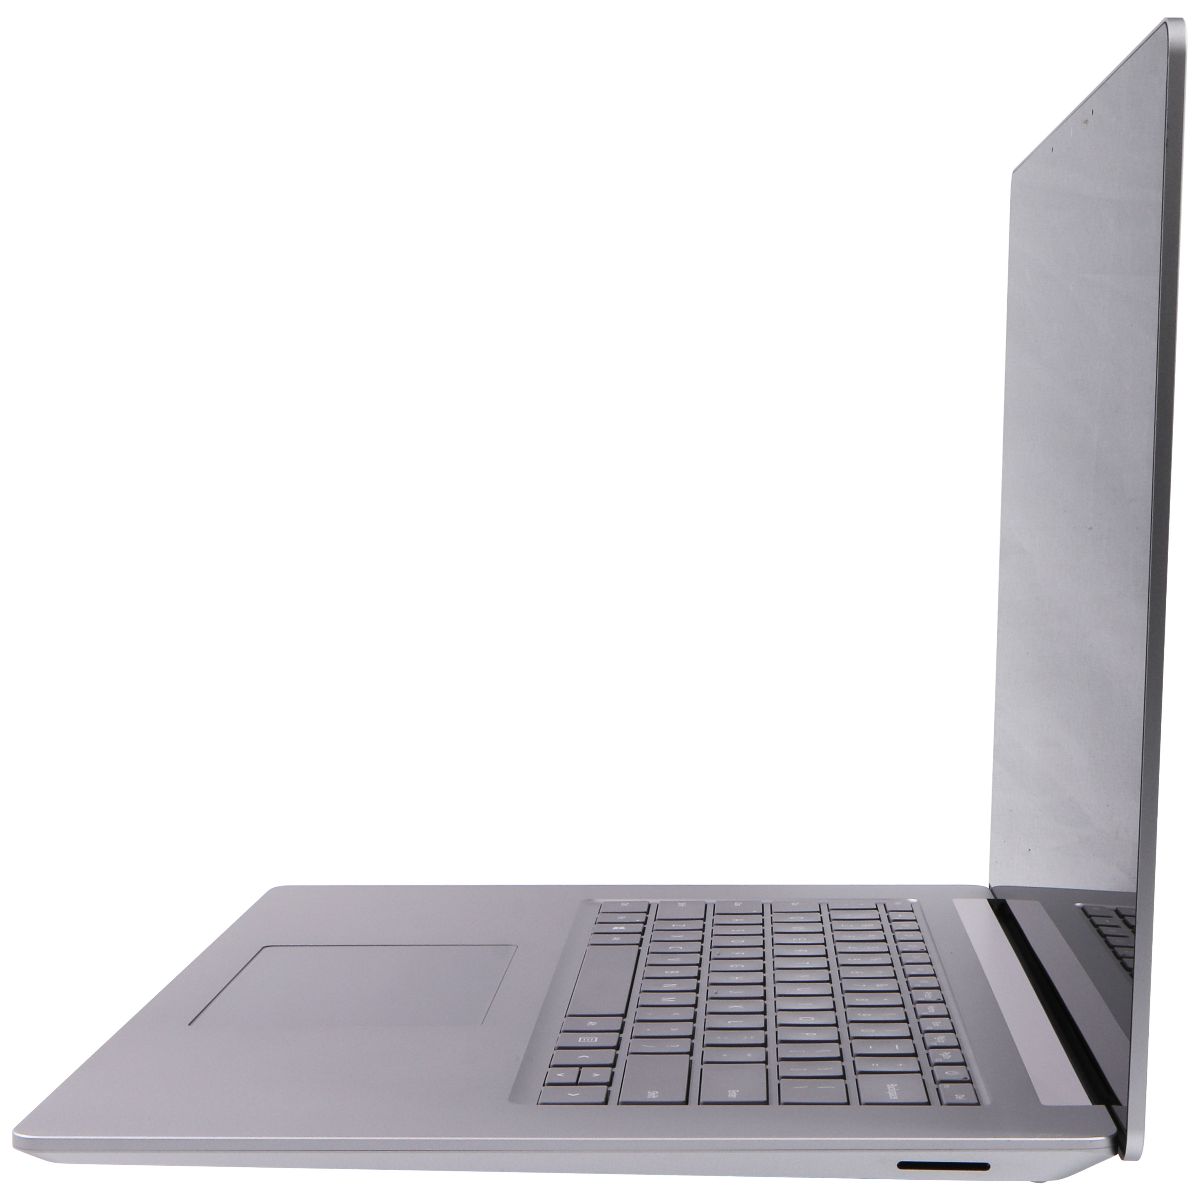 Microsoft Surface Laptop 3 (15-in), AMD Ryzen 5,RX Vega 9,8GB,128GB - Platinum Laptops - PC Laptops & Netbooks Microsoft    - Simple Cell Bulk Wholesale Pricing - USA Seller